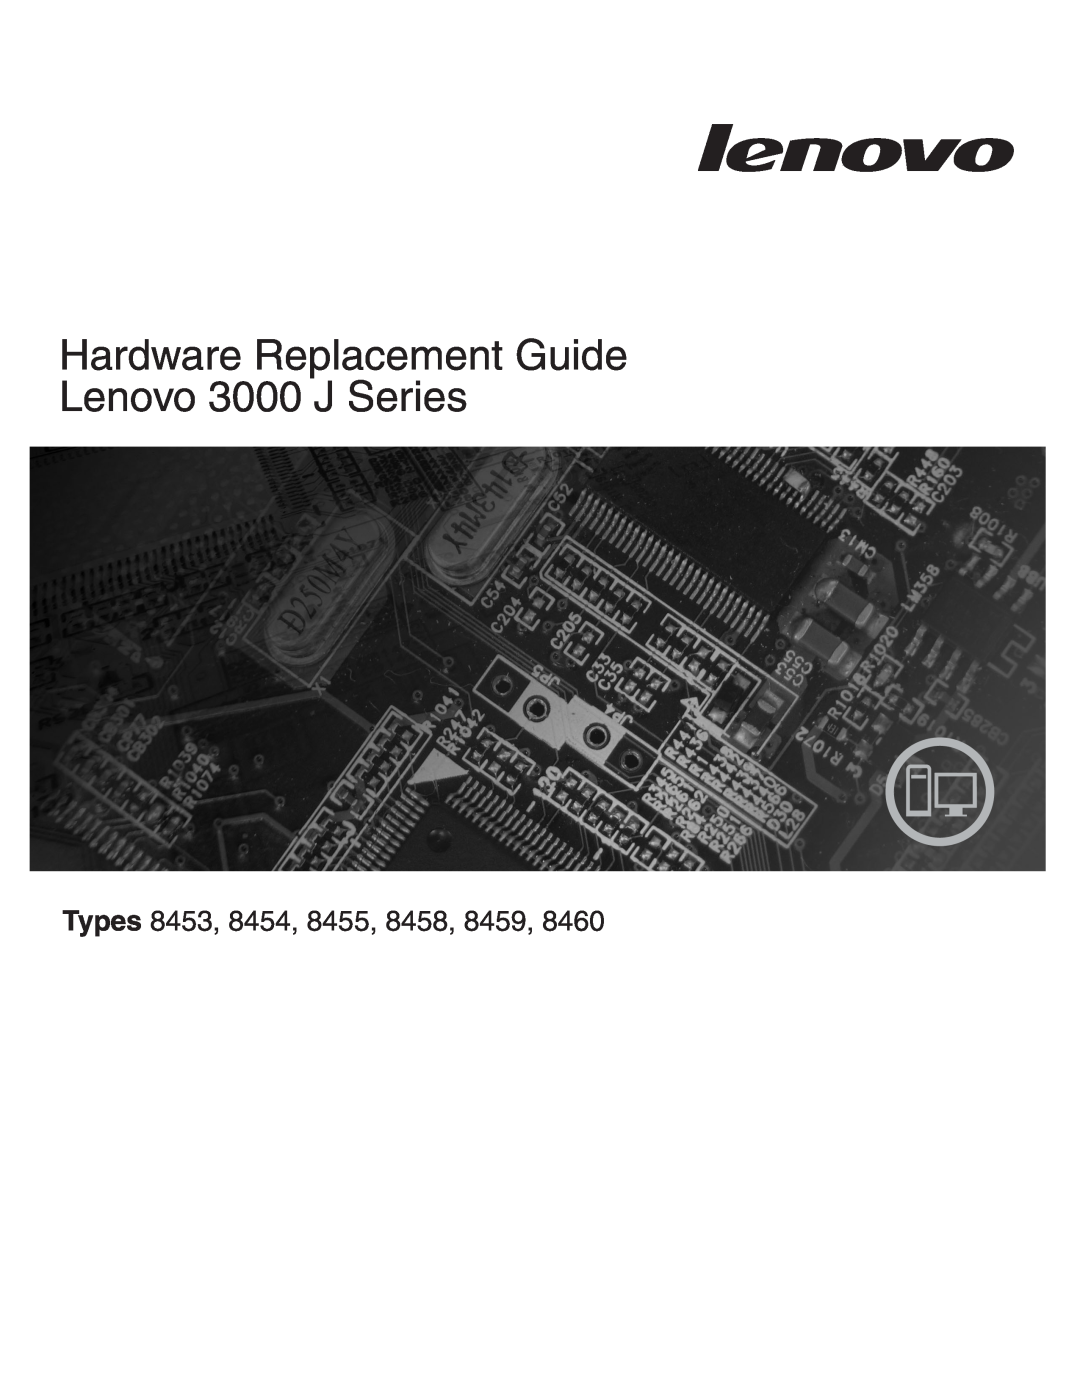 Lenovo manual Hardware Replacement Guide Lenovo 3000 J Series, Types 8453 